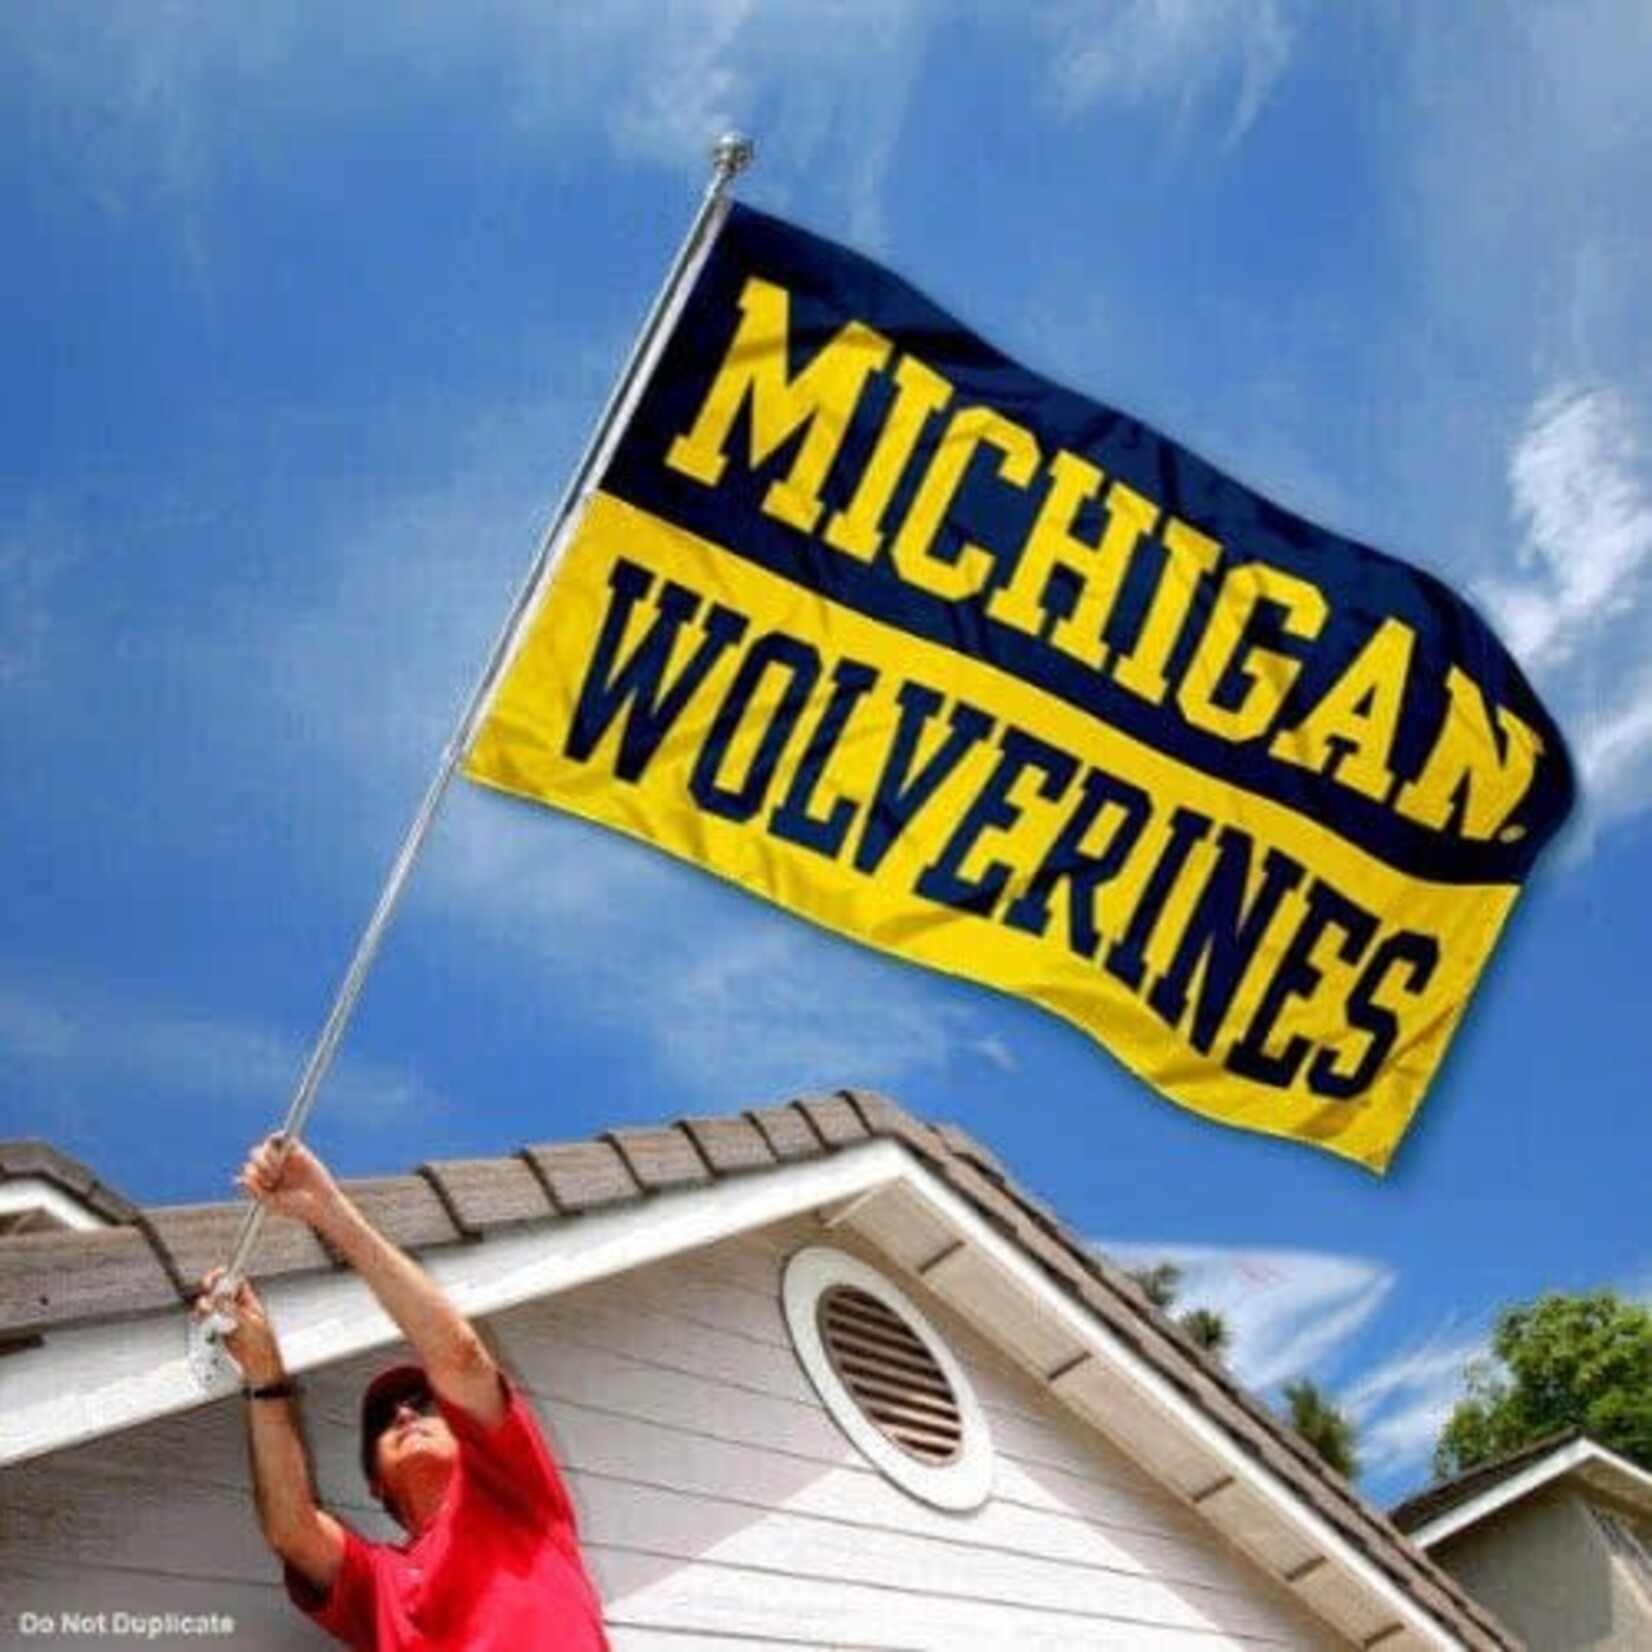 Sewing Concepts Michigan Wolverines Flag 3' x 5' Horizontal Michigan Wolverines